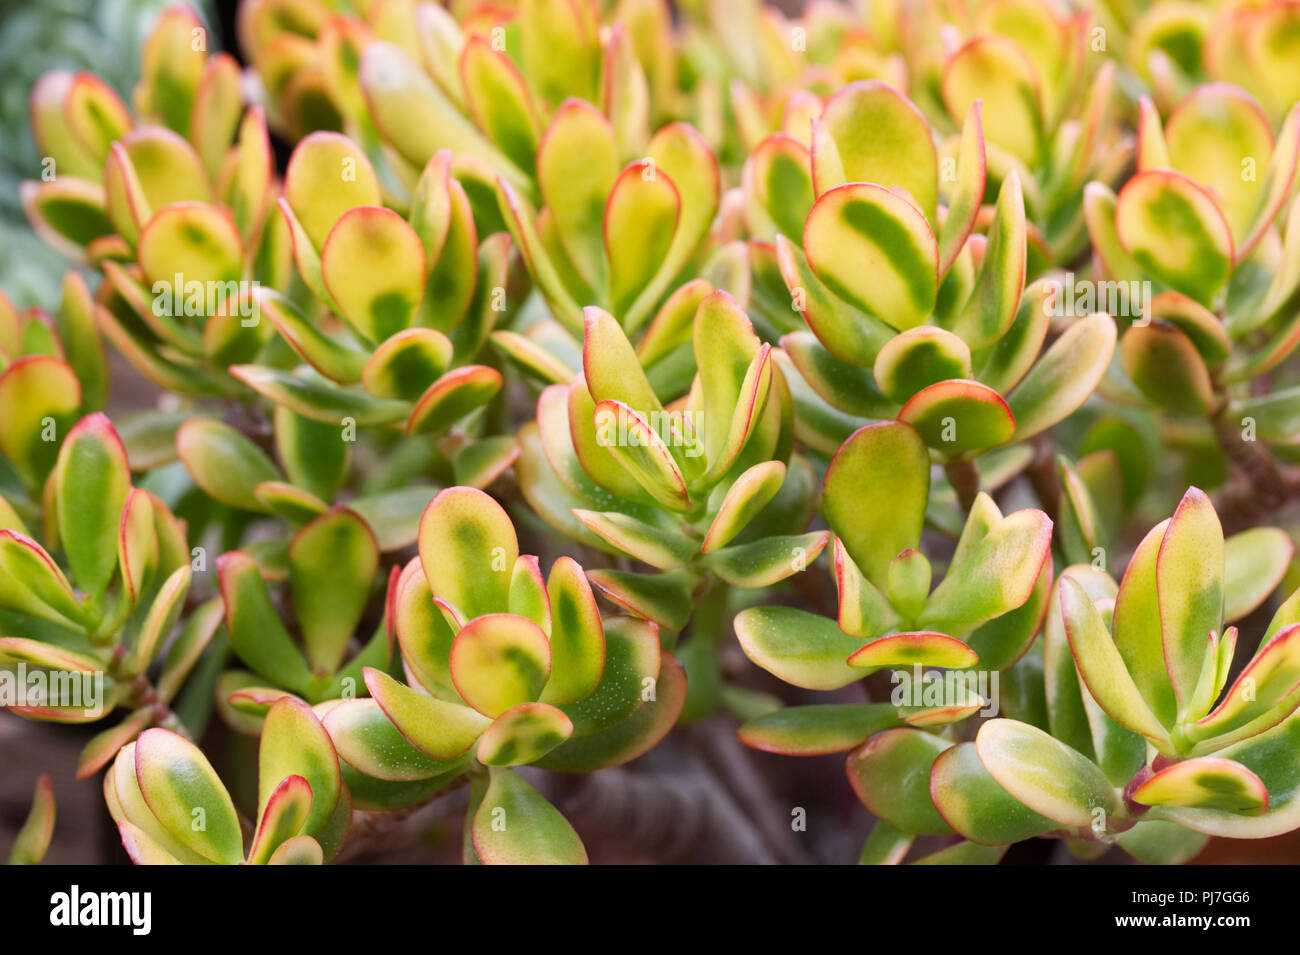 Crassula ovata hummels sunset hi-res stock photography and images - Alamy